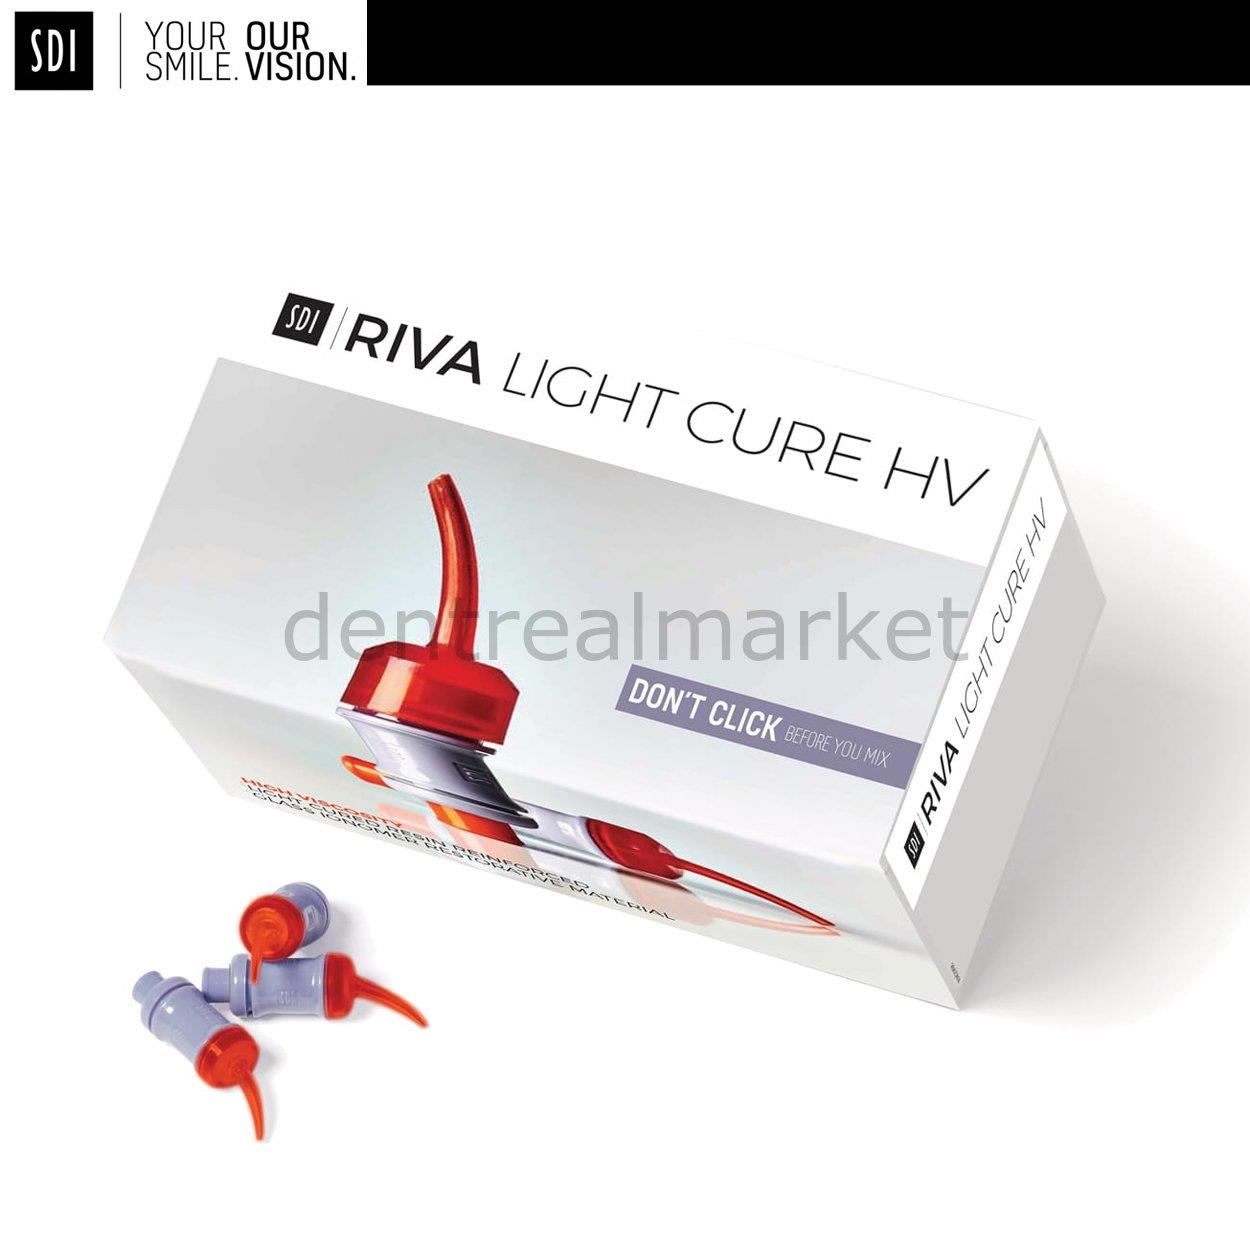 DentrealStore - Sdi Dental Riva Light Cure HV - Light Cured Resin Reinforced Glass Ionomer Restorative Material - A2